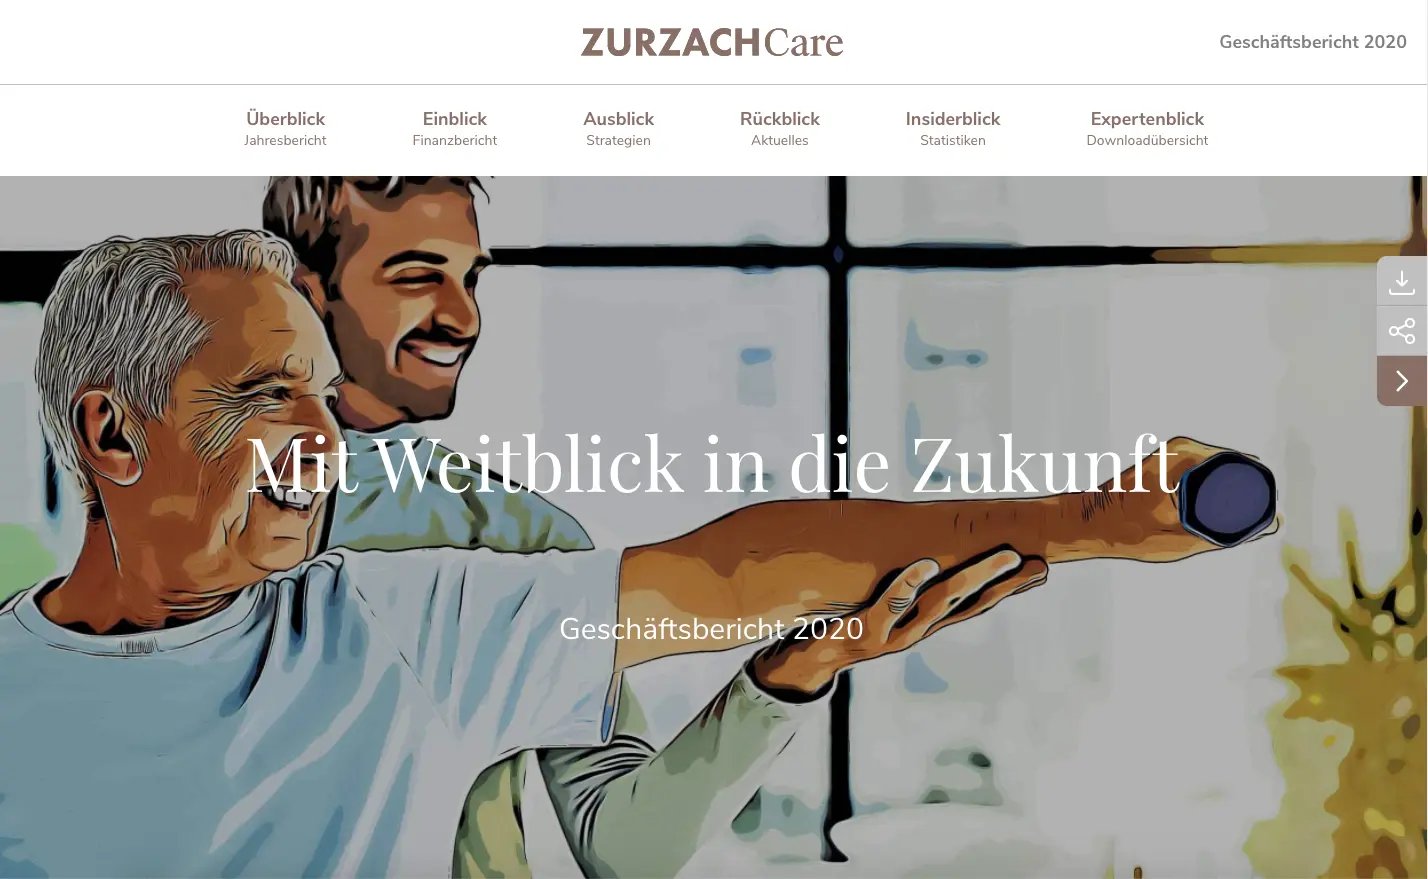 NEW ZURZACH CARE ANNUAL REPORT CREATED IN BEST TIME